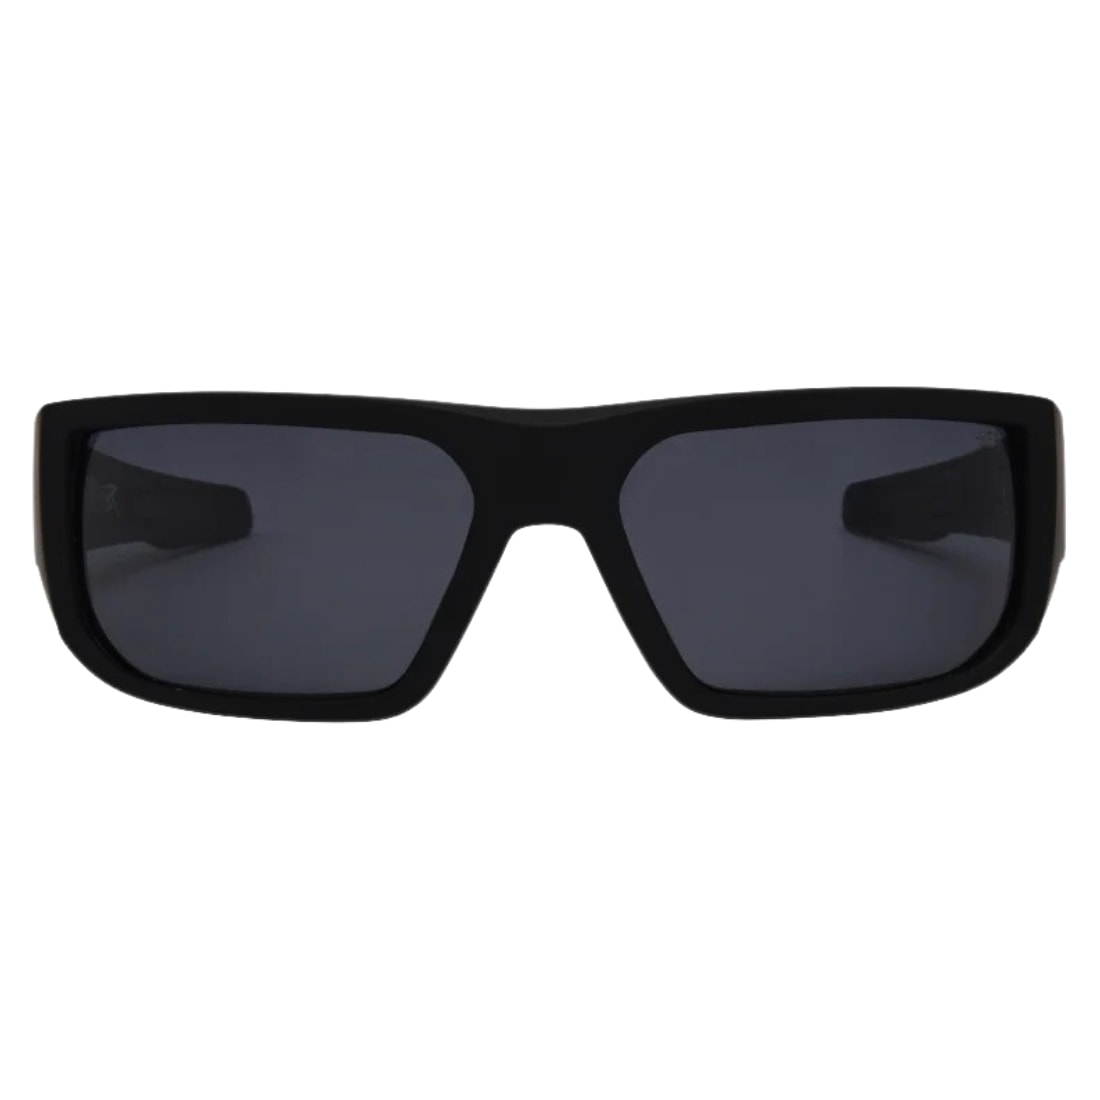 I-Sea Greyson Fletcher Wrap Around Polarised Sunglasses - Black/Smoke Polarized Lens - Wrap Around Sunglasses by I-Sea